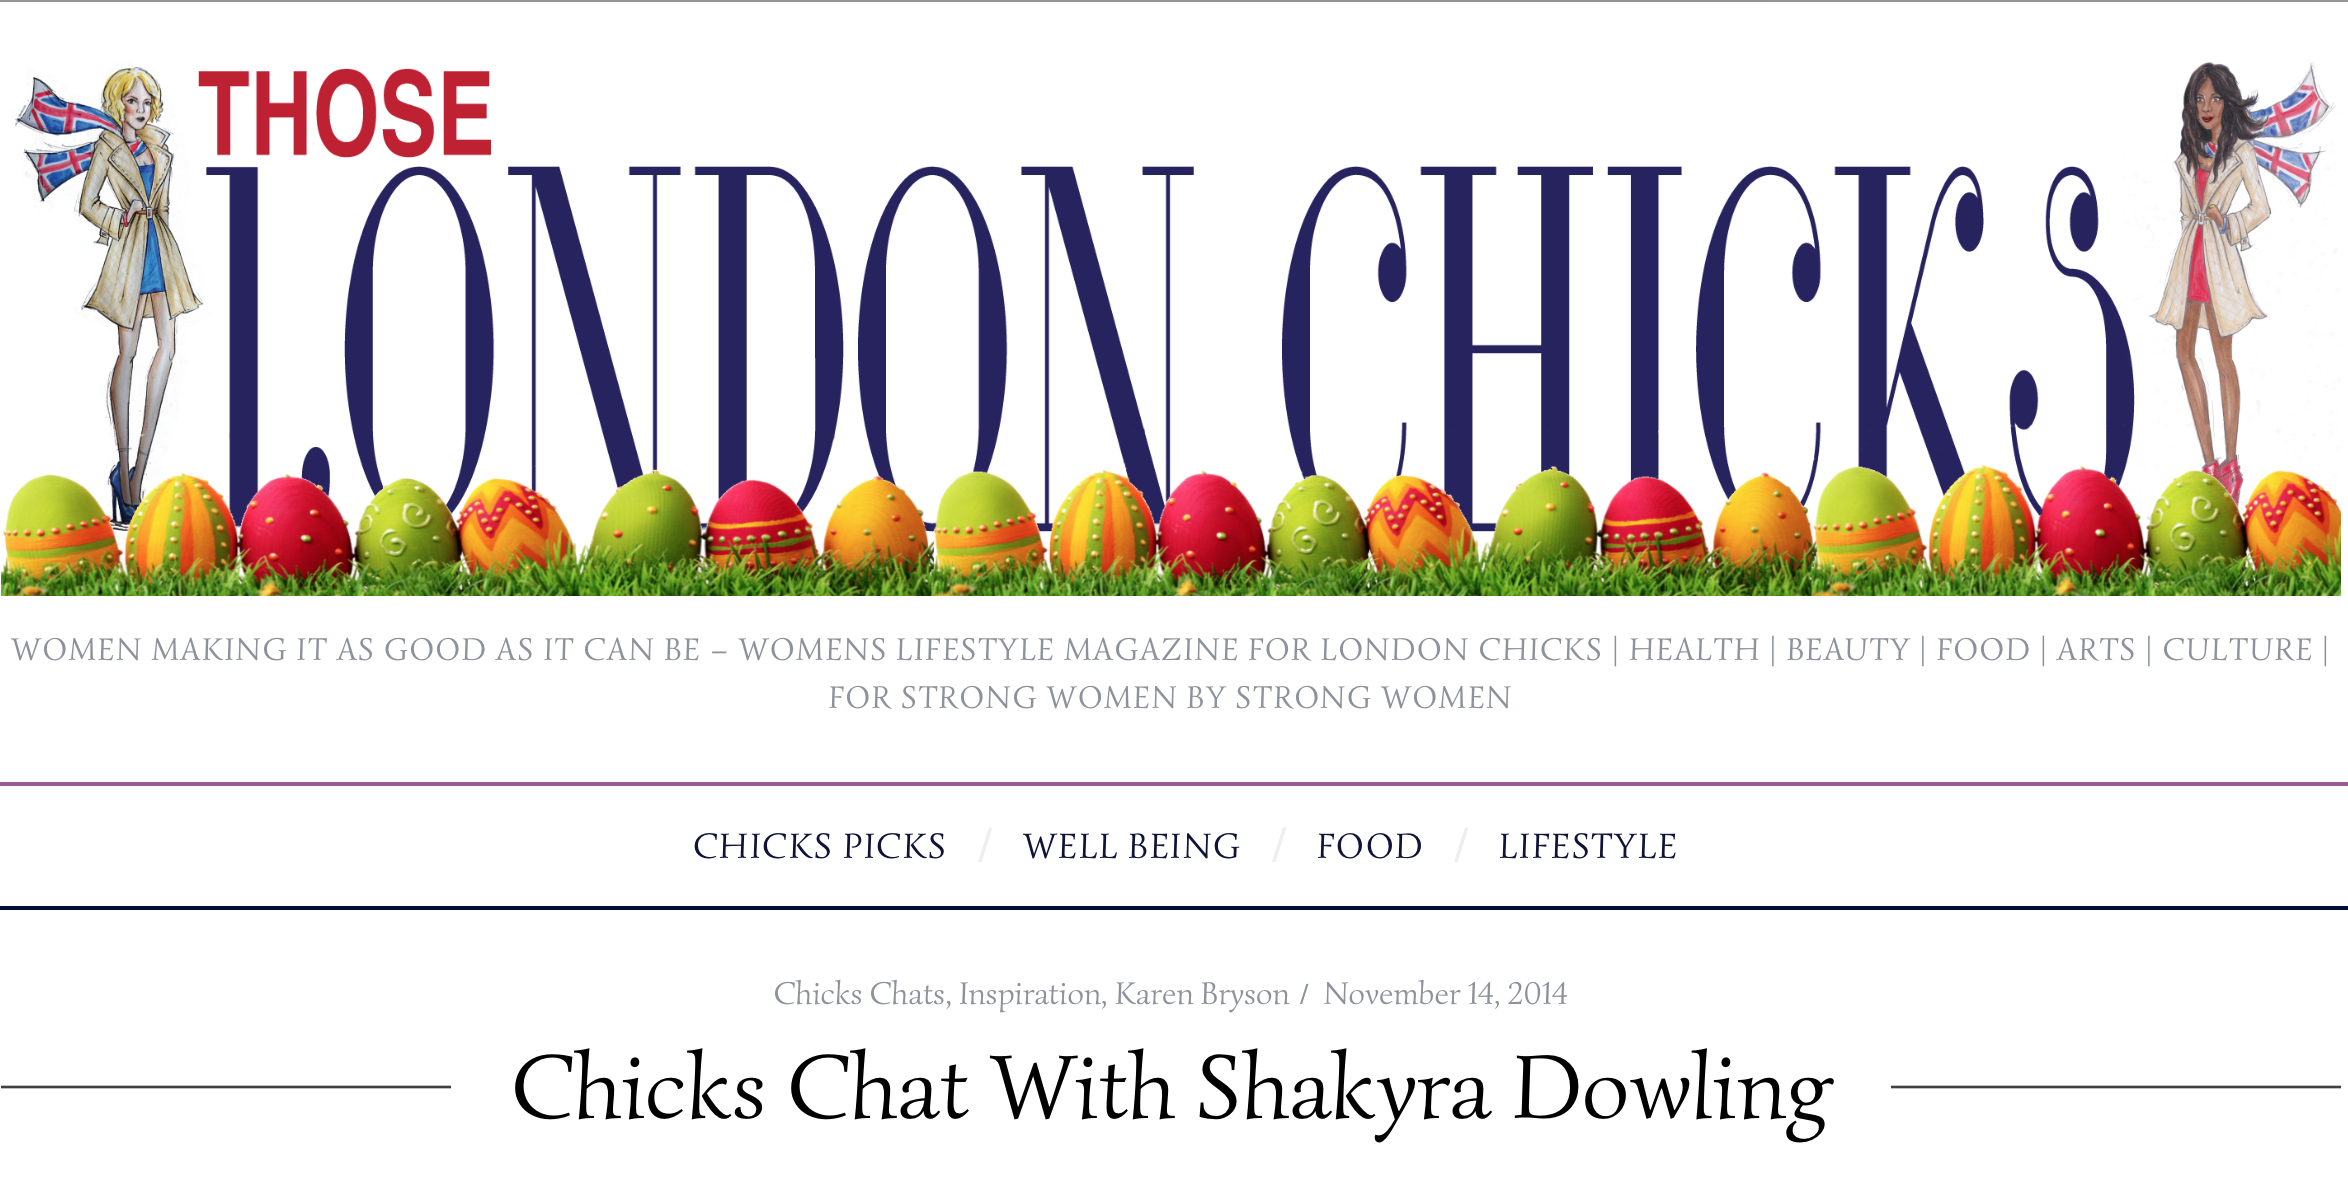 Chicks Chats, Inspiration, Interview by Karen Bryson